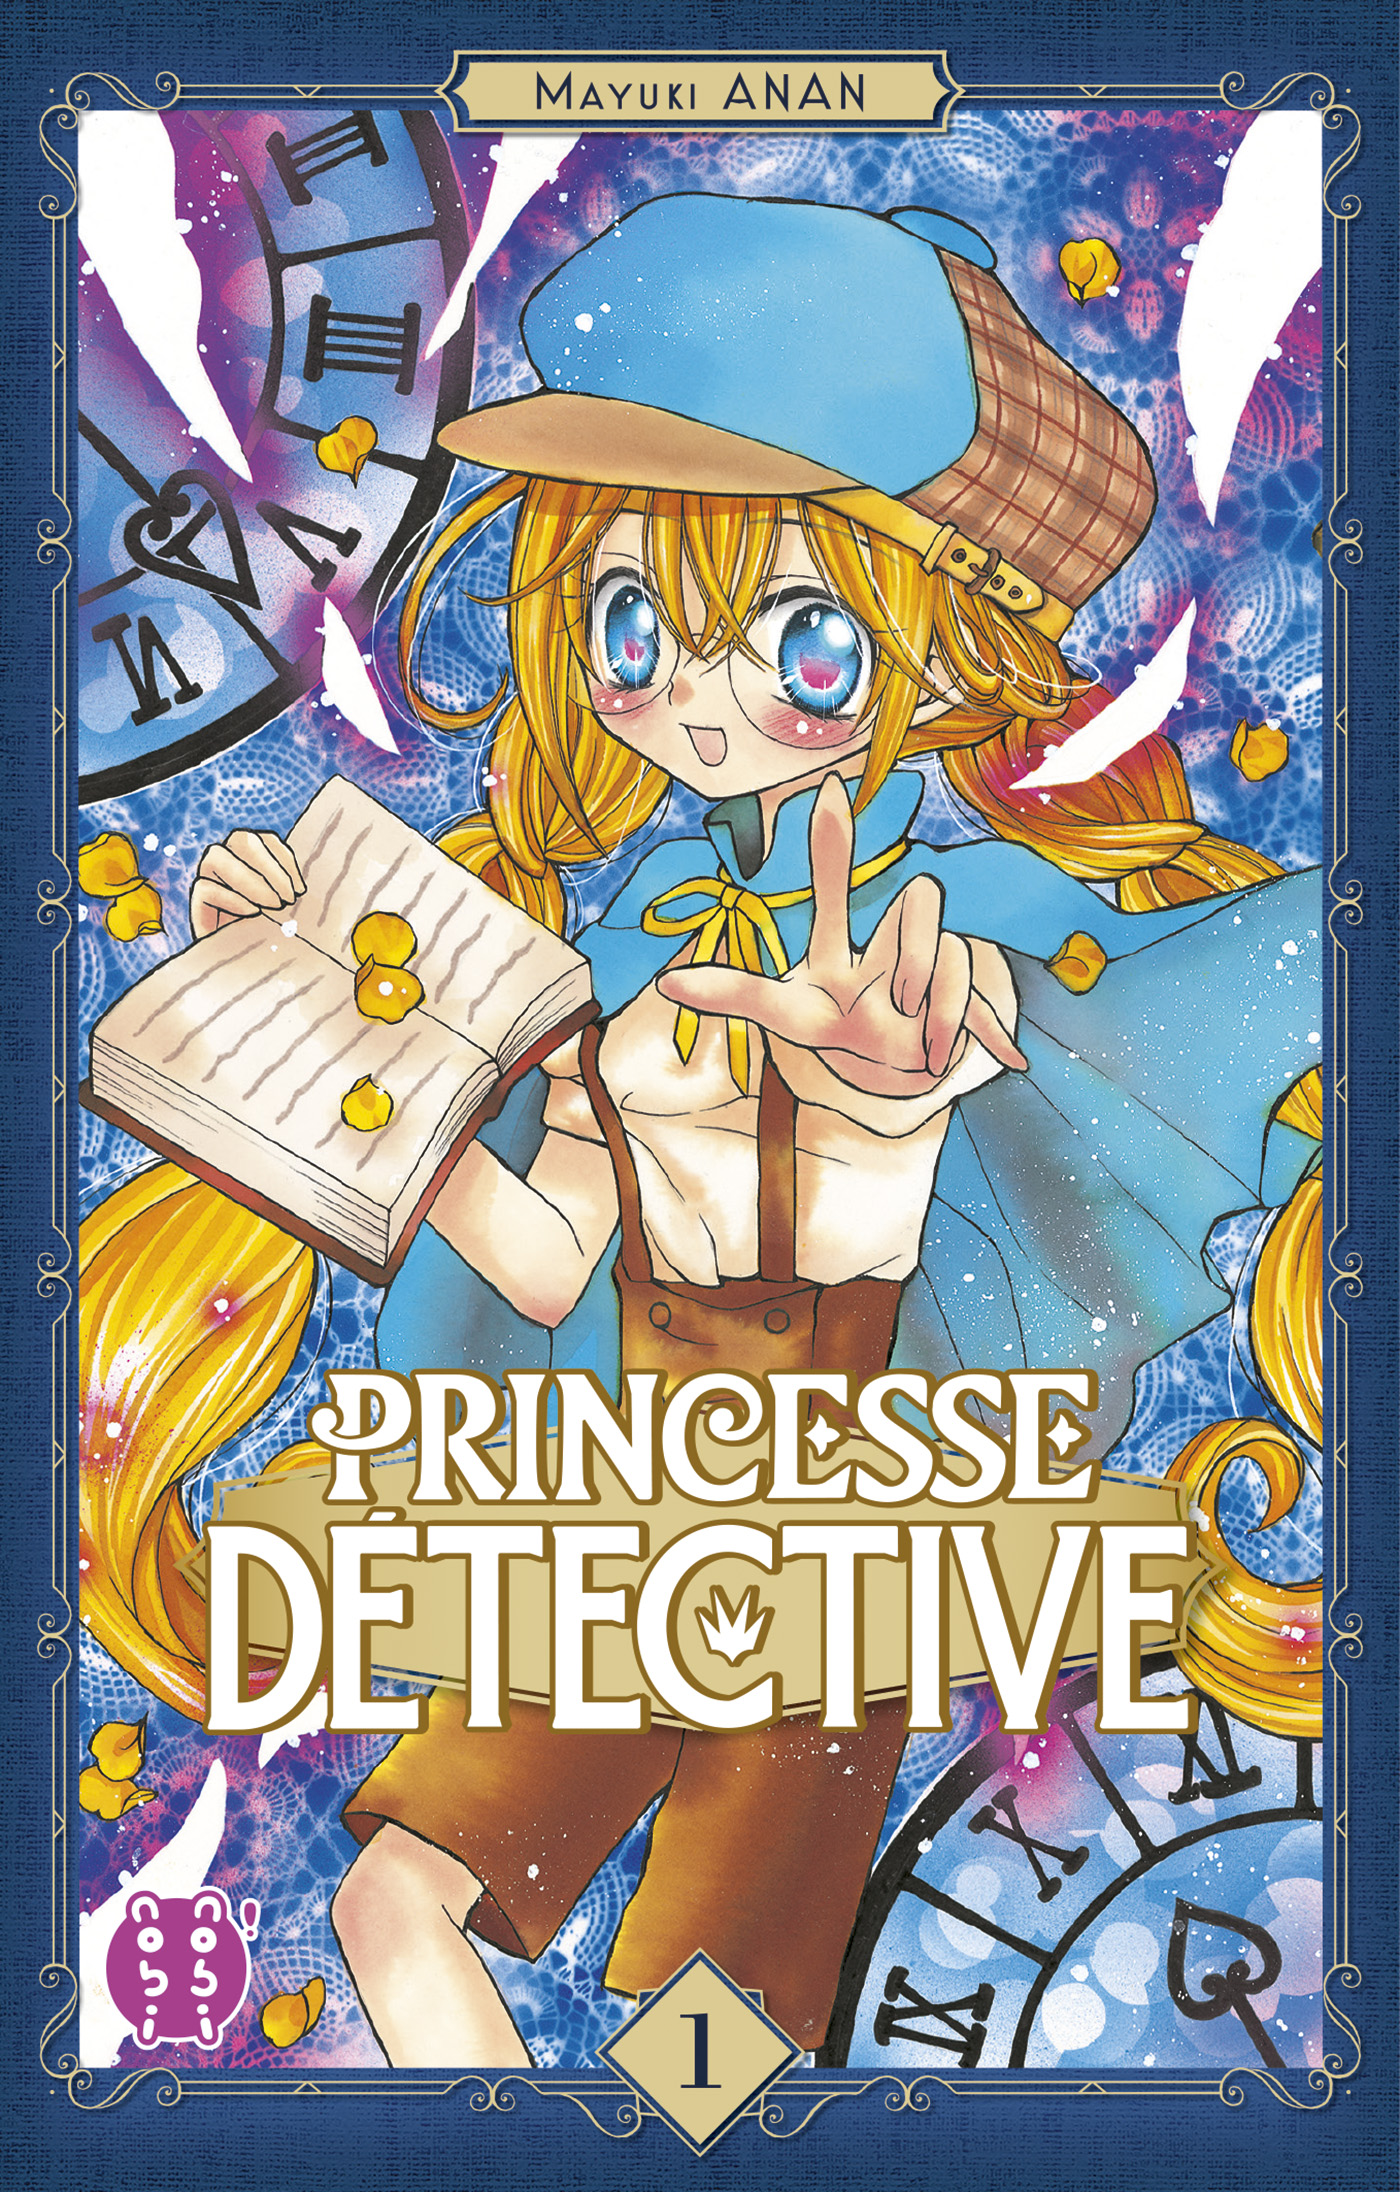 Princess detective 